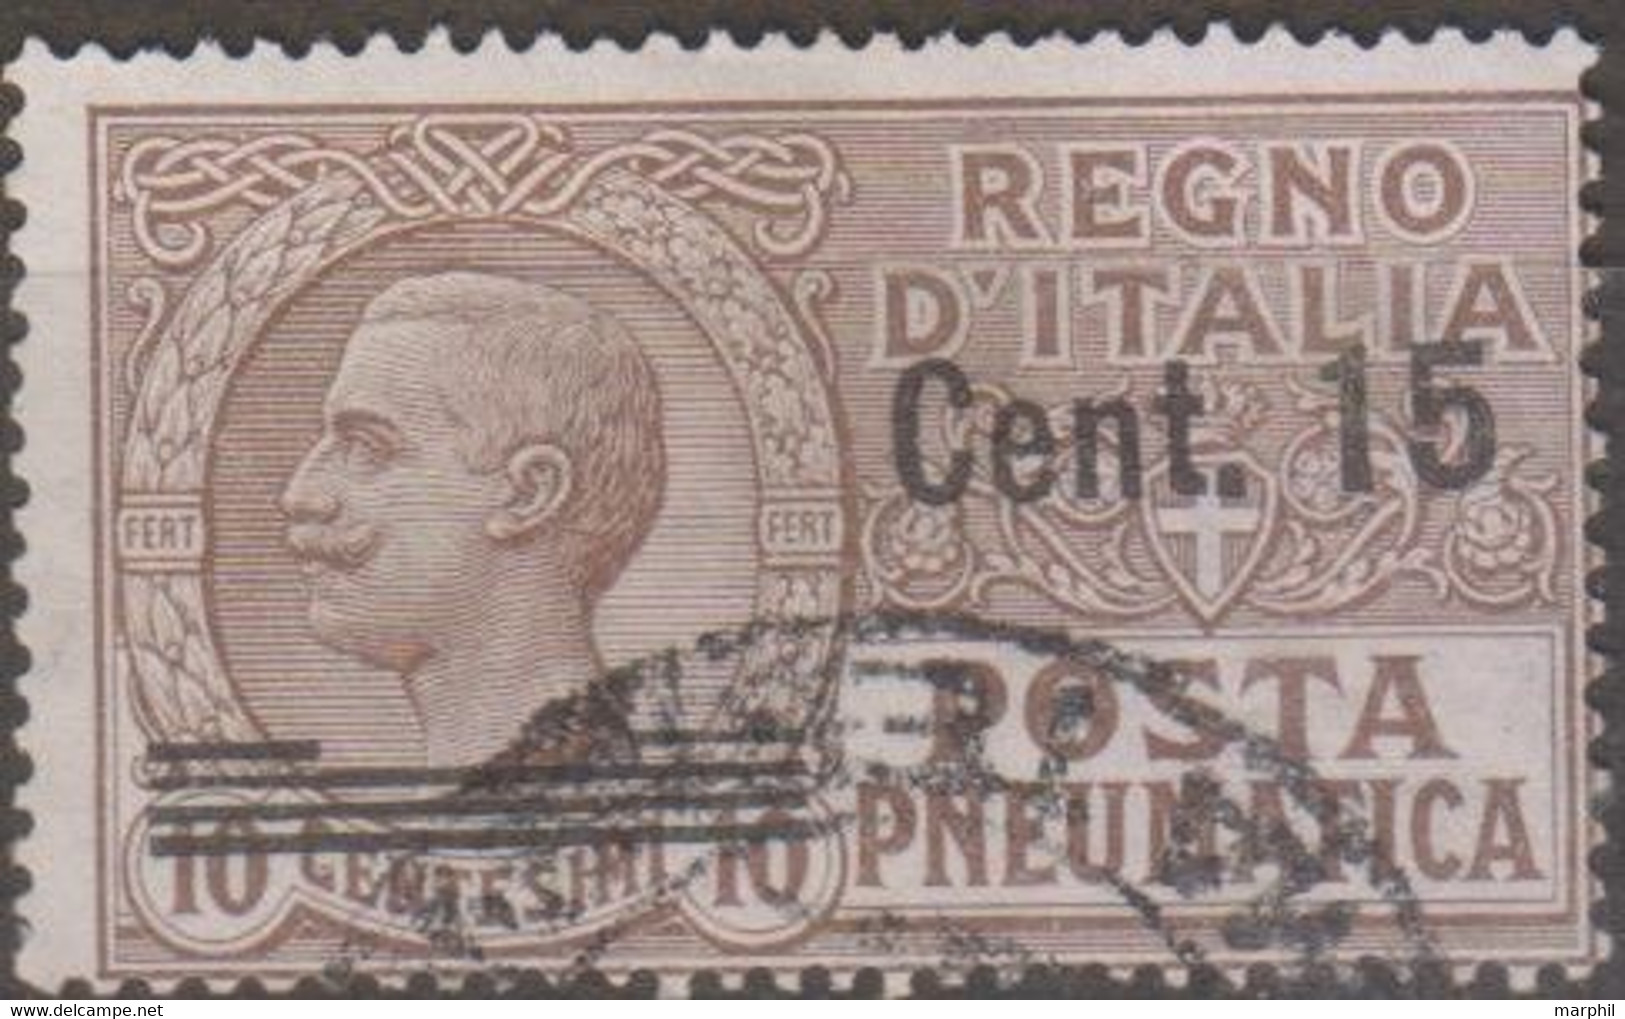 Italia 1924 Posta Pneumatica UnN°PN4 (o) - Pneumatische Post